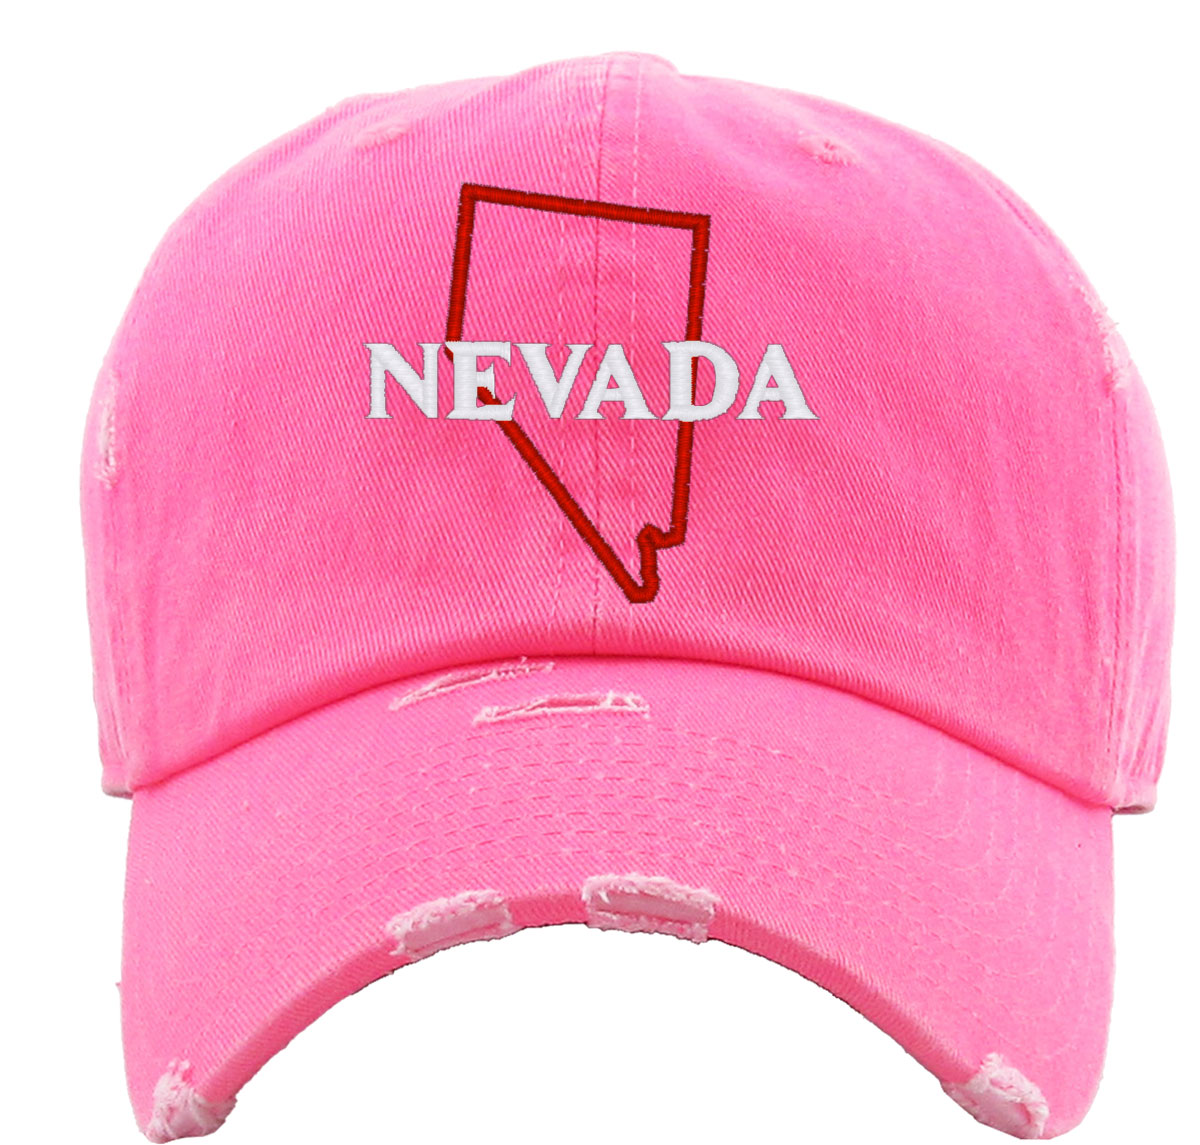 Nevada Vintage Baseball Cap